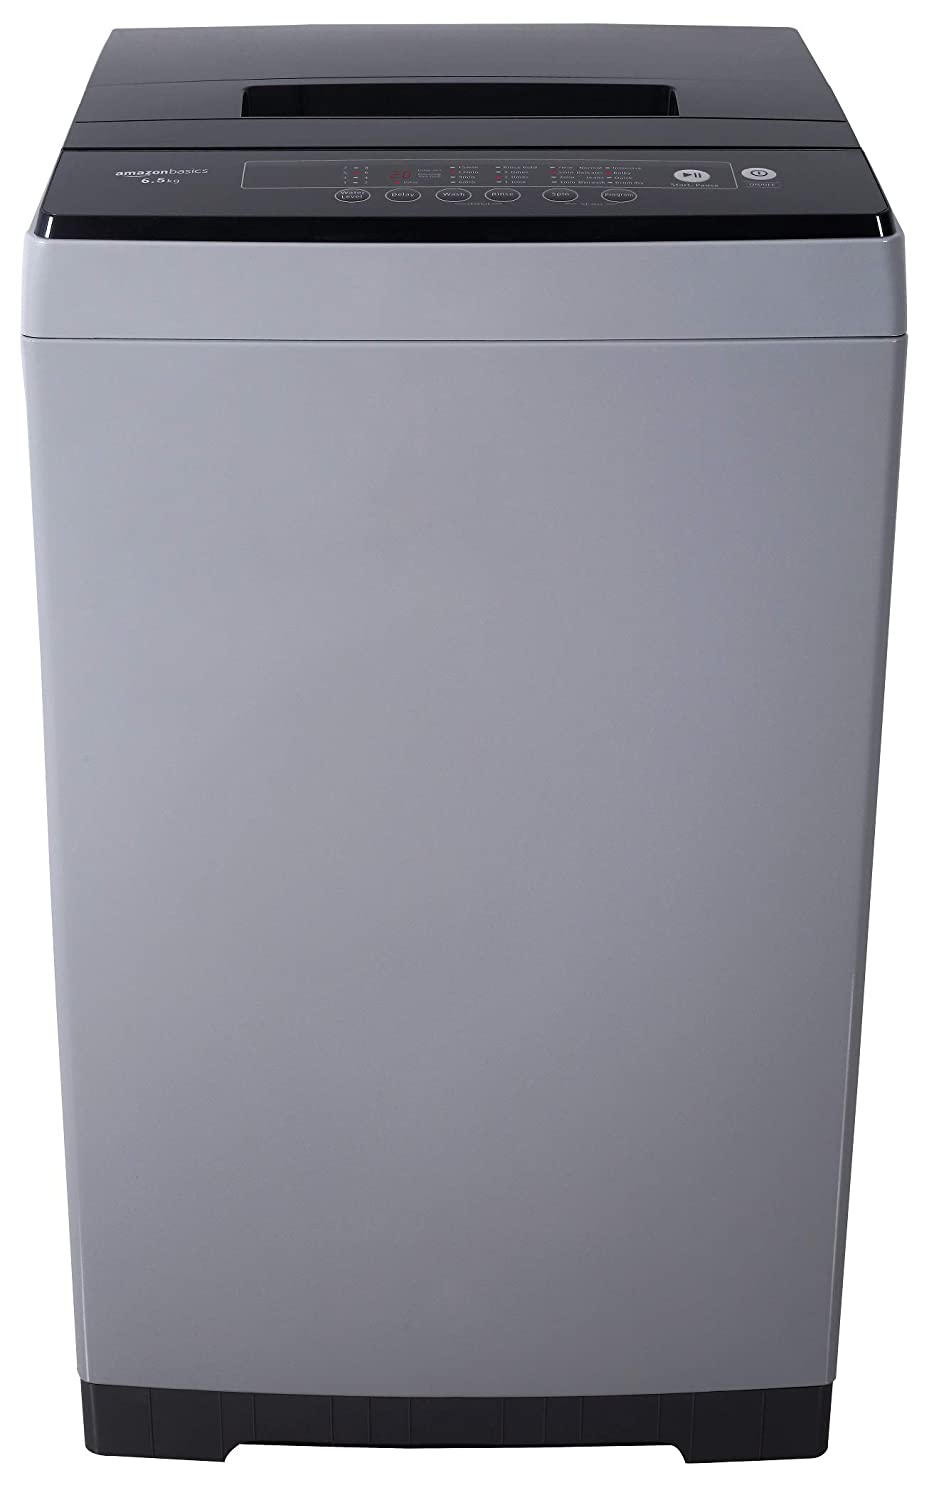 AmazonBasics 6.5 kg Fully-Automatic Top Load Washing Machine (Full Metal body, LED Display)